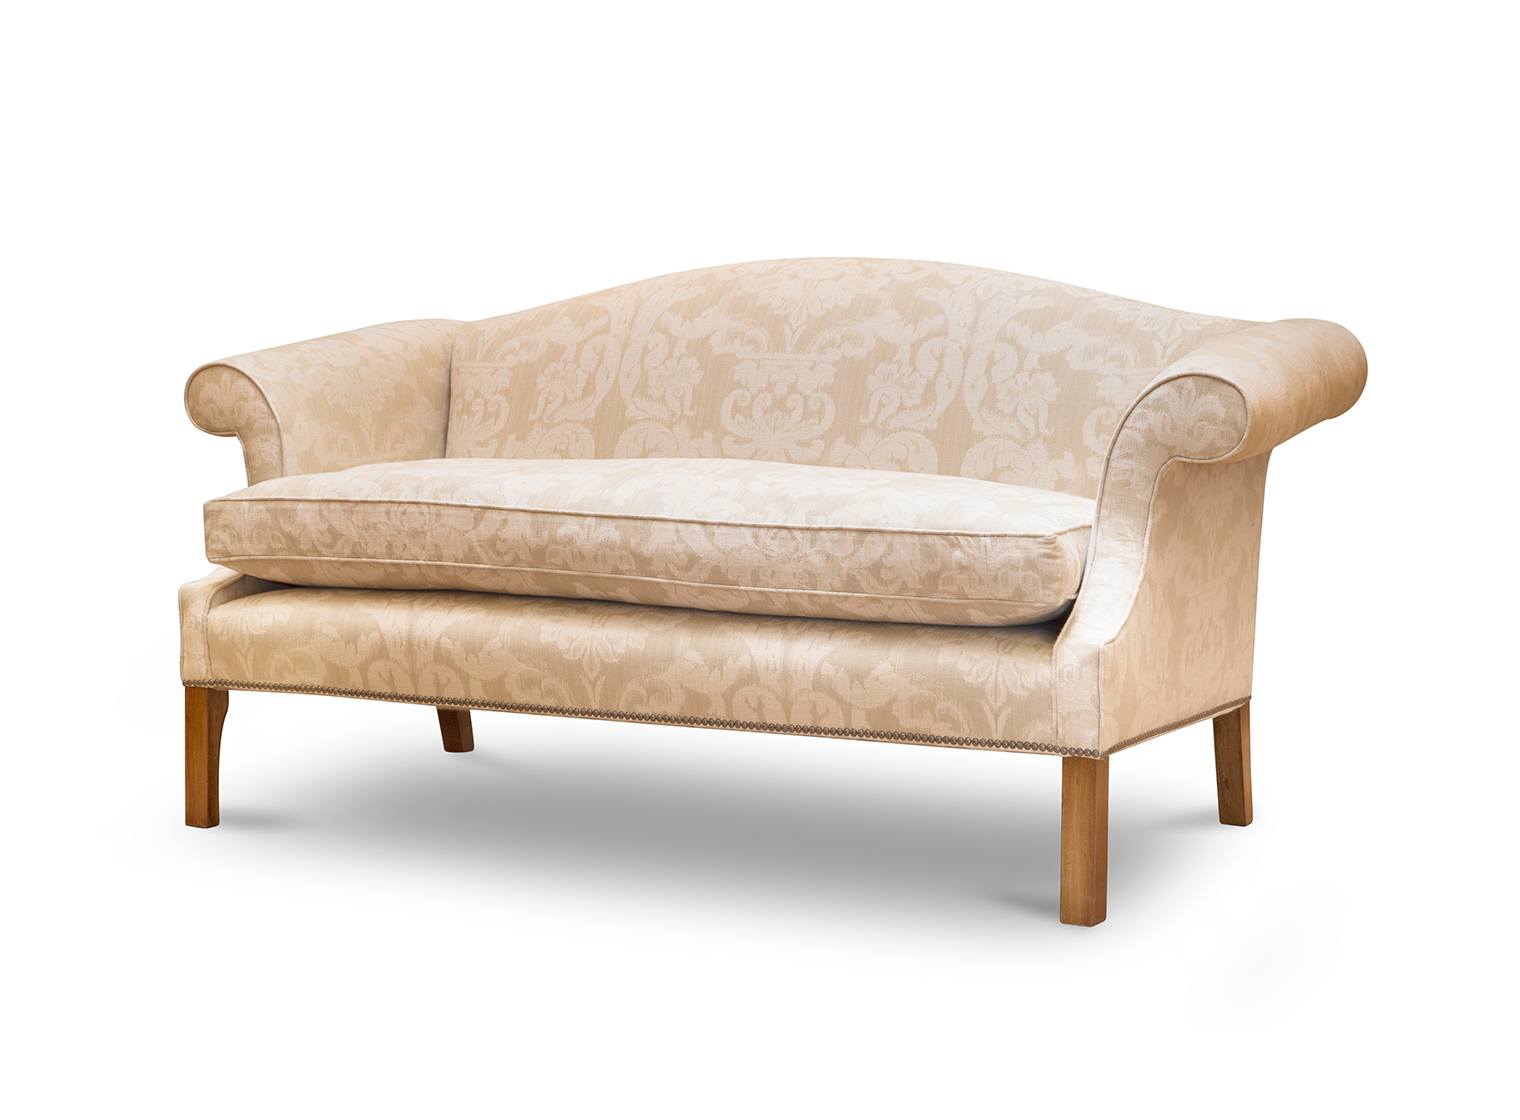 Congreve 2.5 seater sofa in Wicklow damask - Vanilla - Beaumont & Fletcher